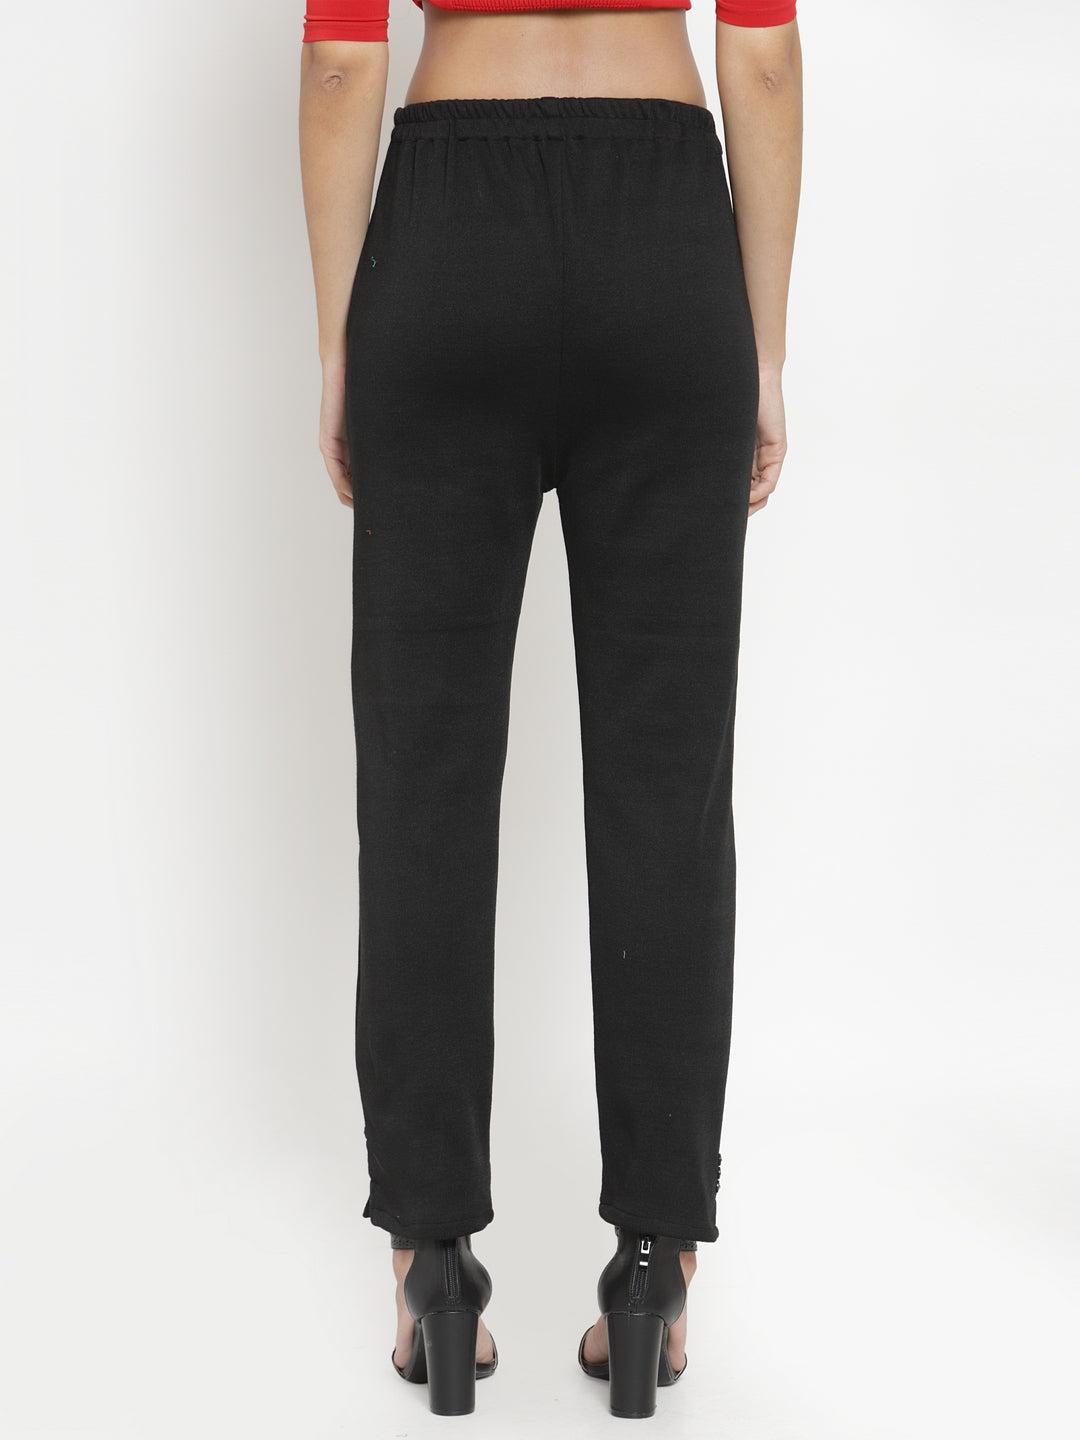 Clora Black & Dark Fawn Solid Woolen Trouser (Pack of 2)